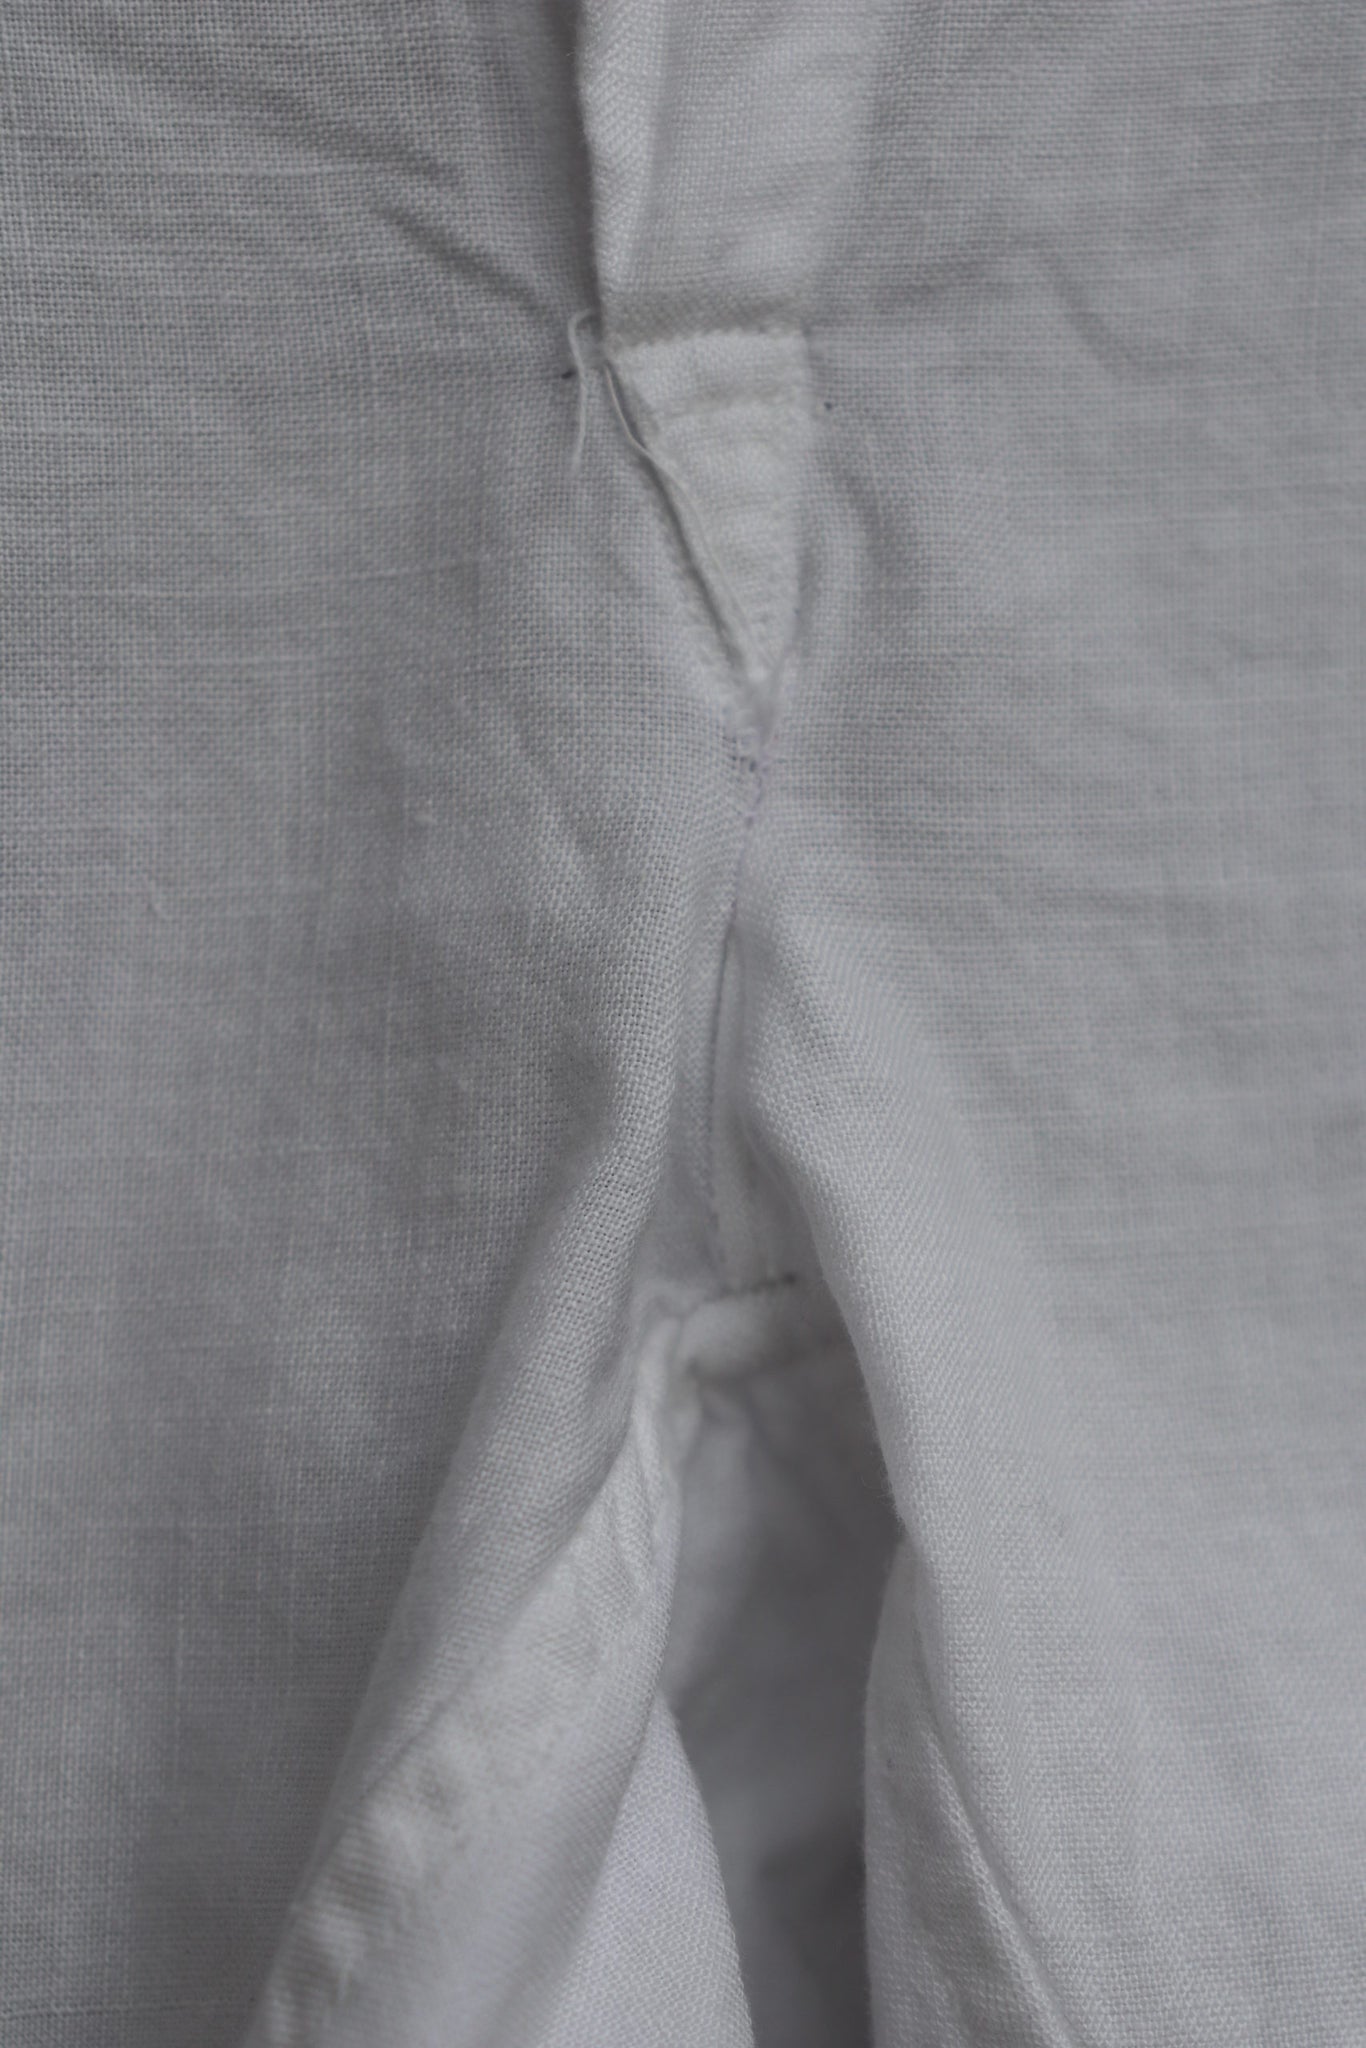 1920s French Vintage Men's White Cotton Long Johns